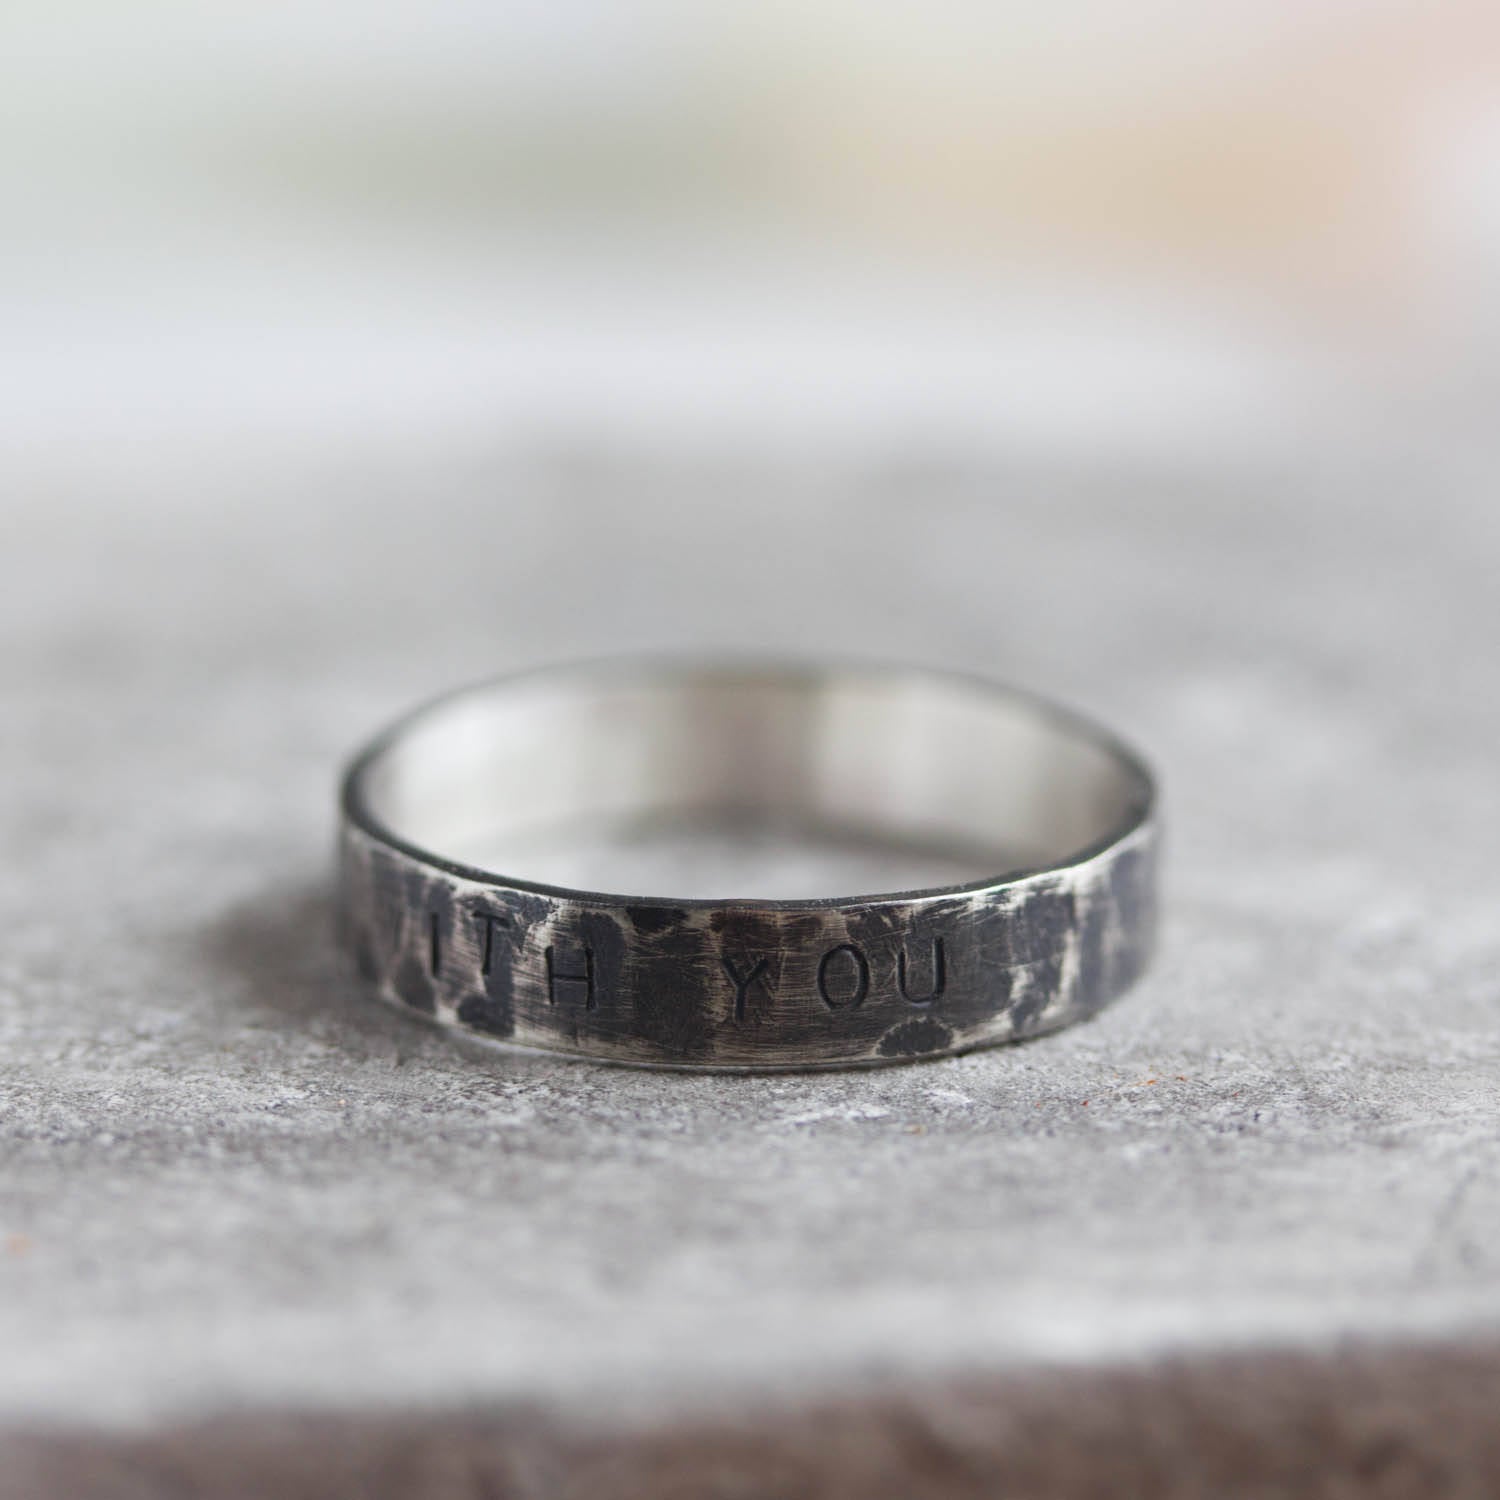 Hidden message ring - men's sterling silver ring